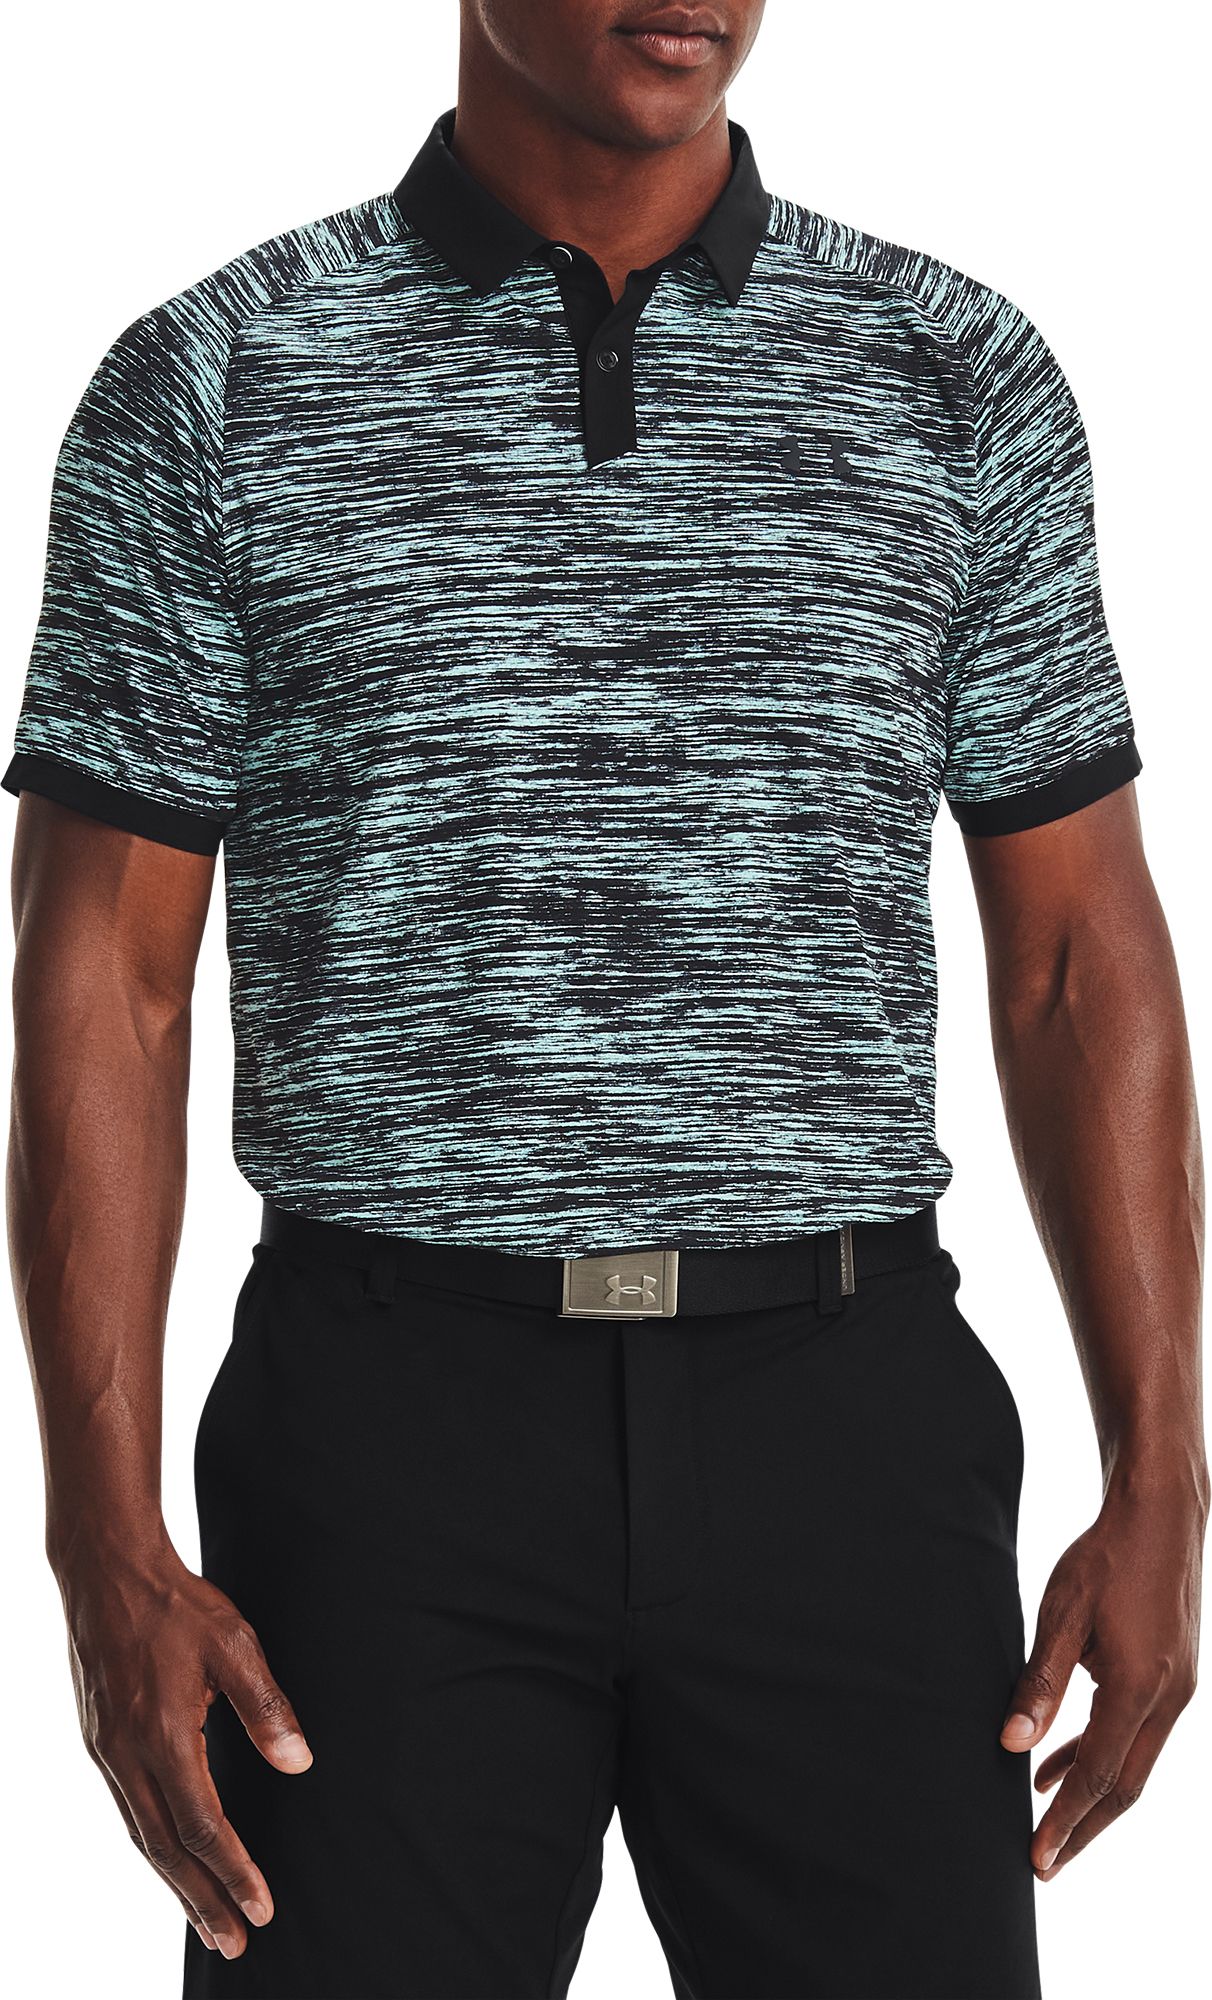 adidas golf shirts big and tall